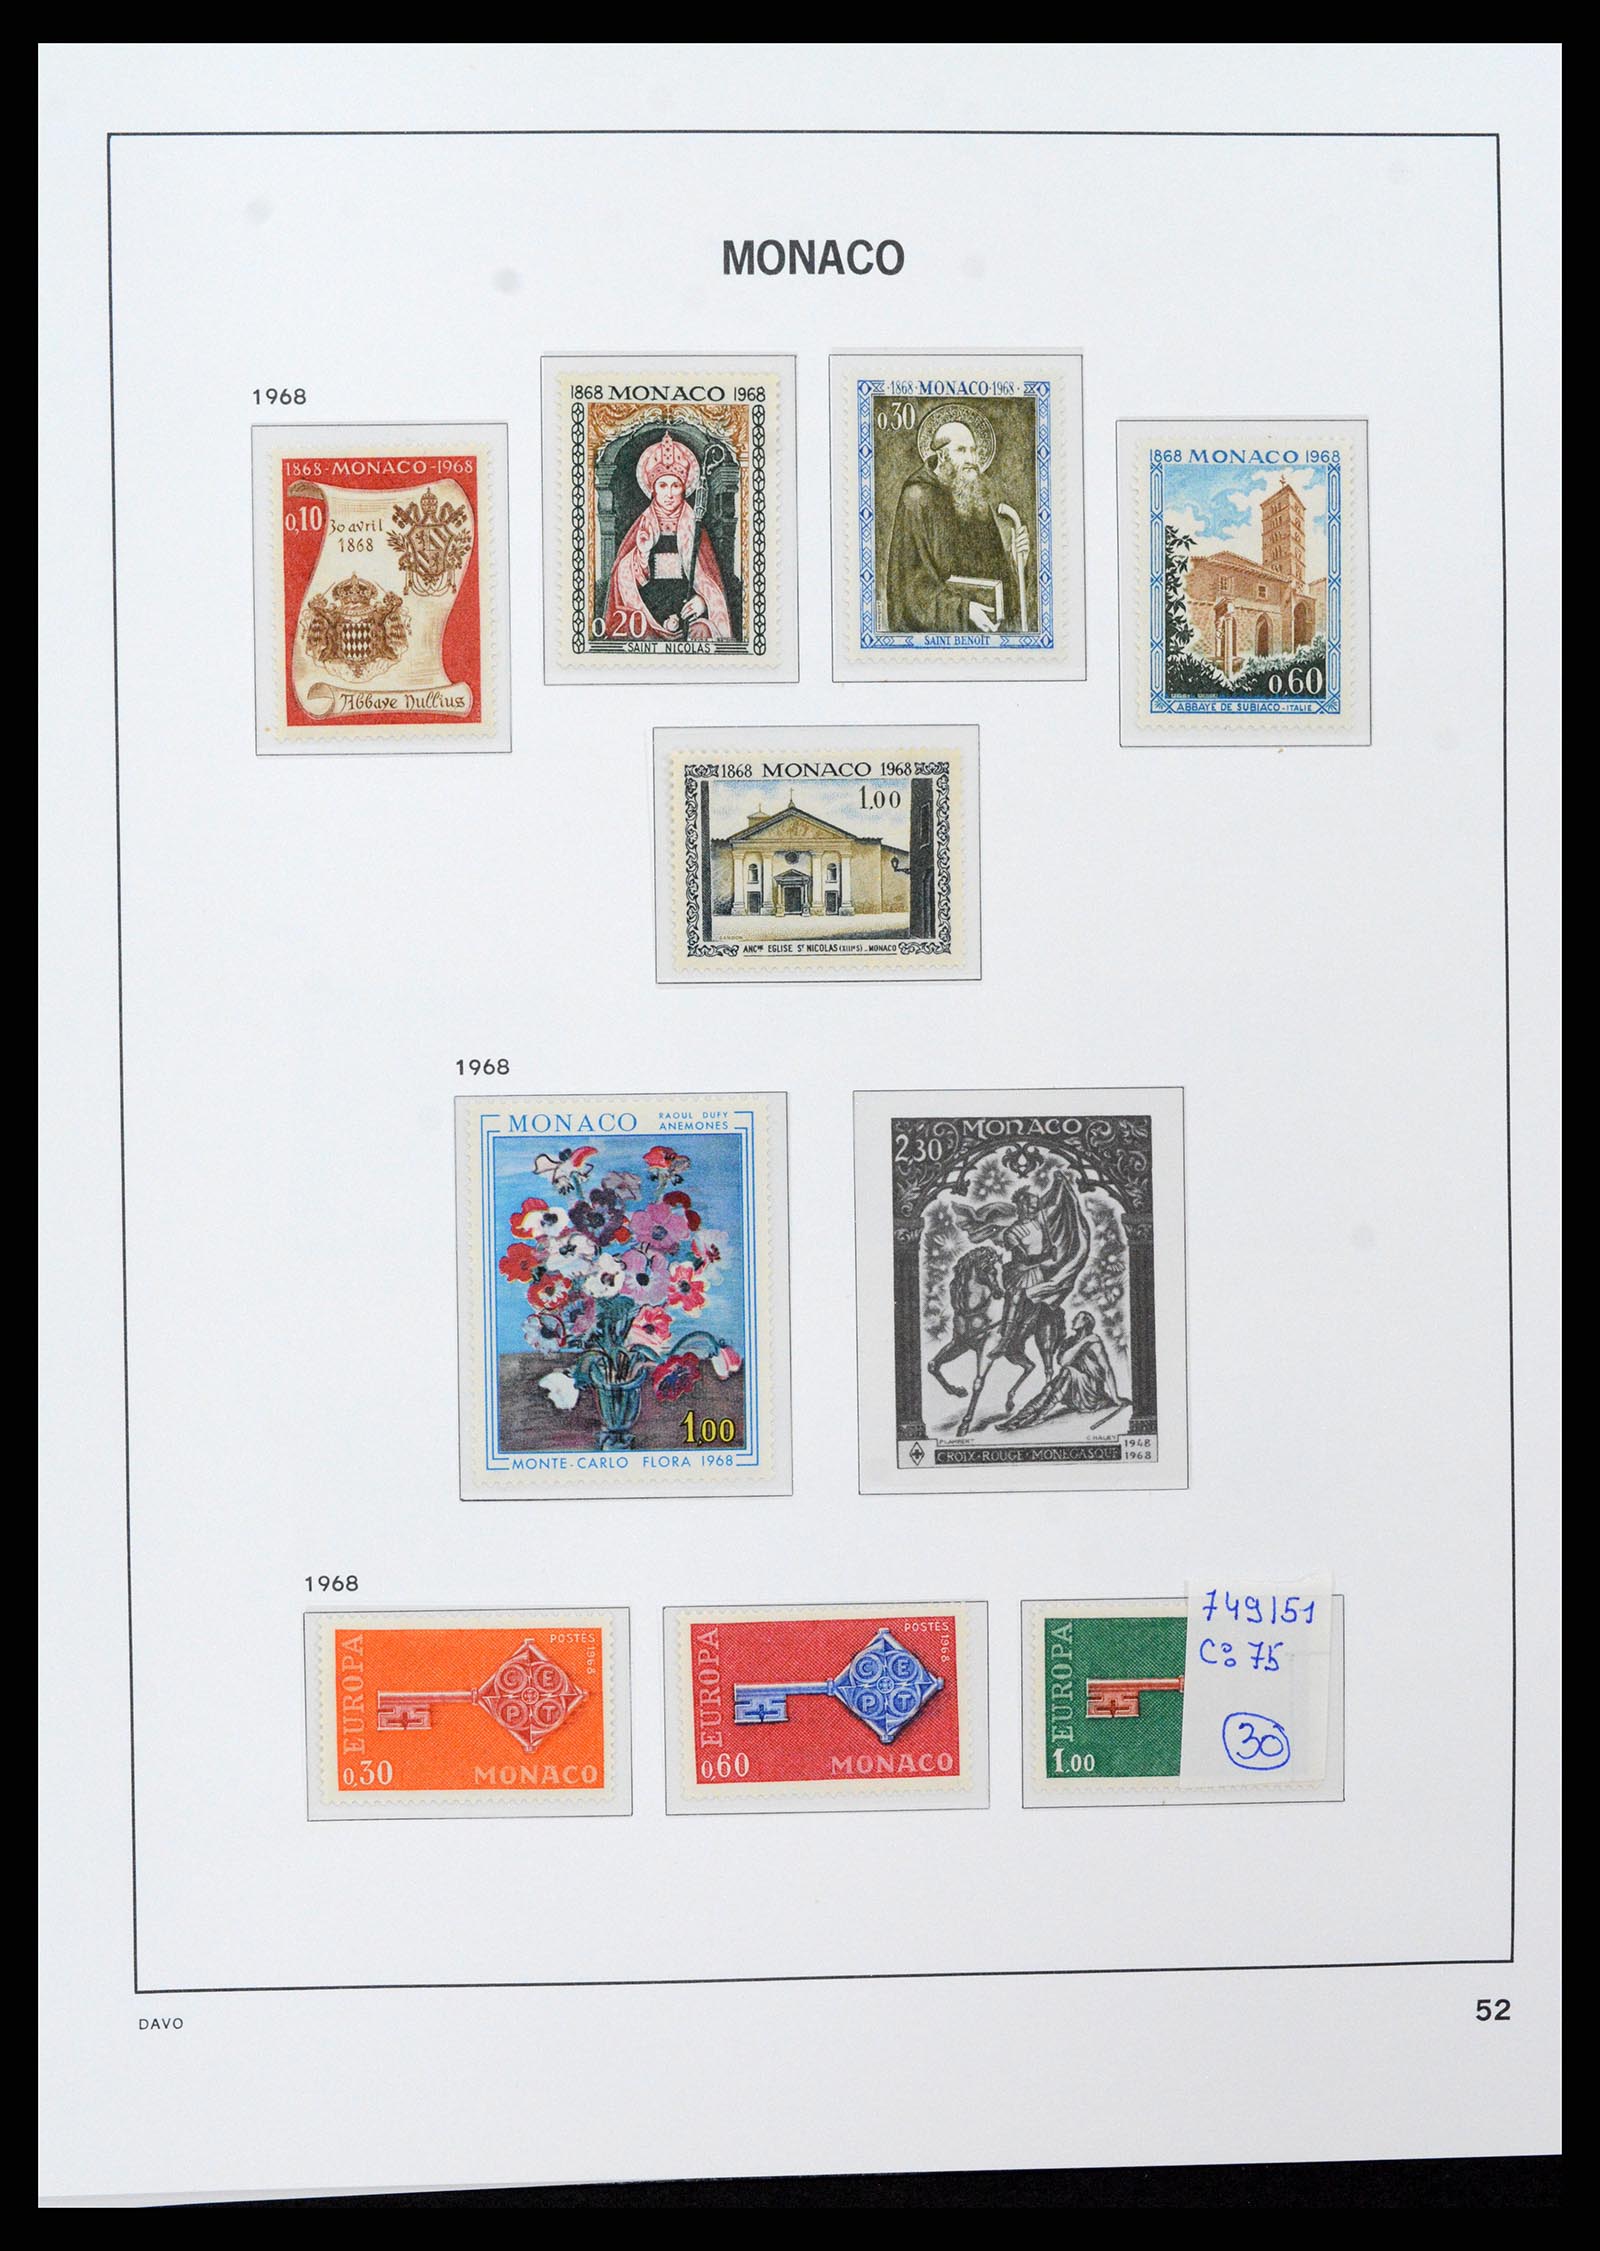 37279 052 - Stamp collection 37279 Monaco 1885-1969.